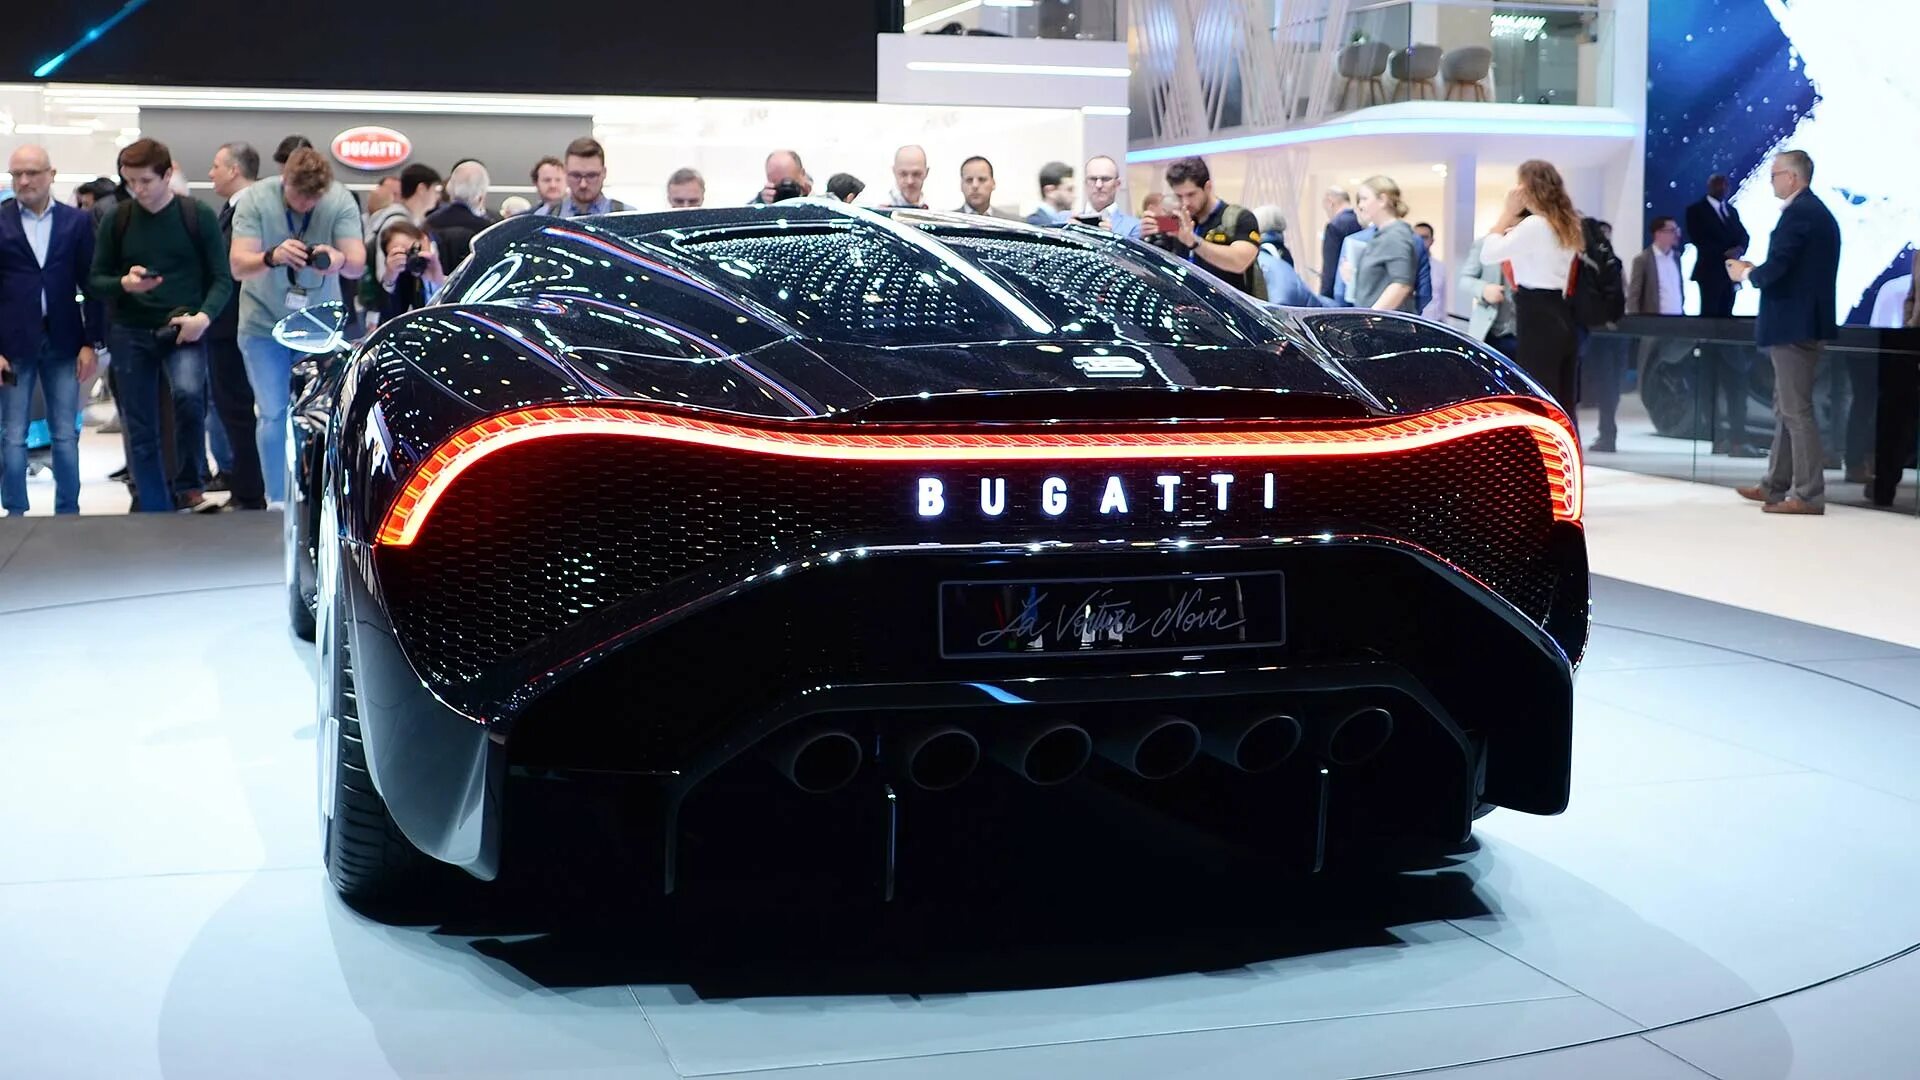 Bugatti voiture noire цена. Машина Bugatti la voiture noire. Бугатти la voiture noire 2021. Бугатти 2020 Нойре. Самый дорогой Бугатти в мире 2021.